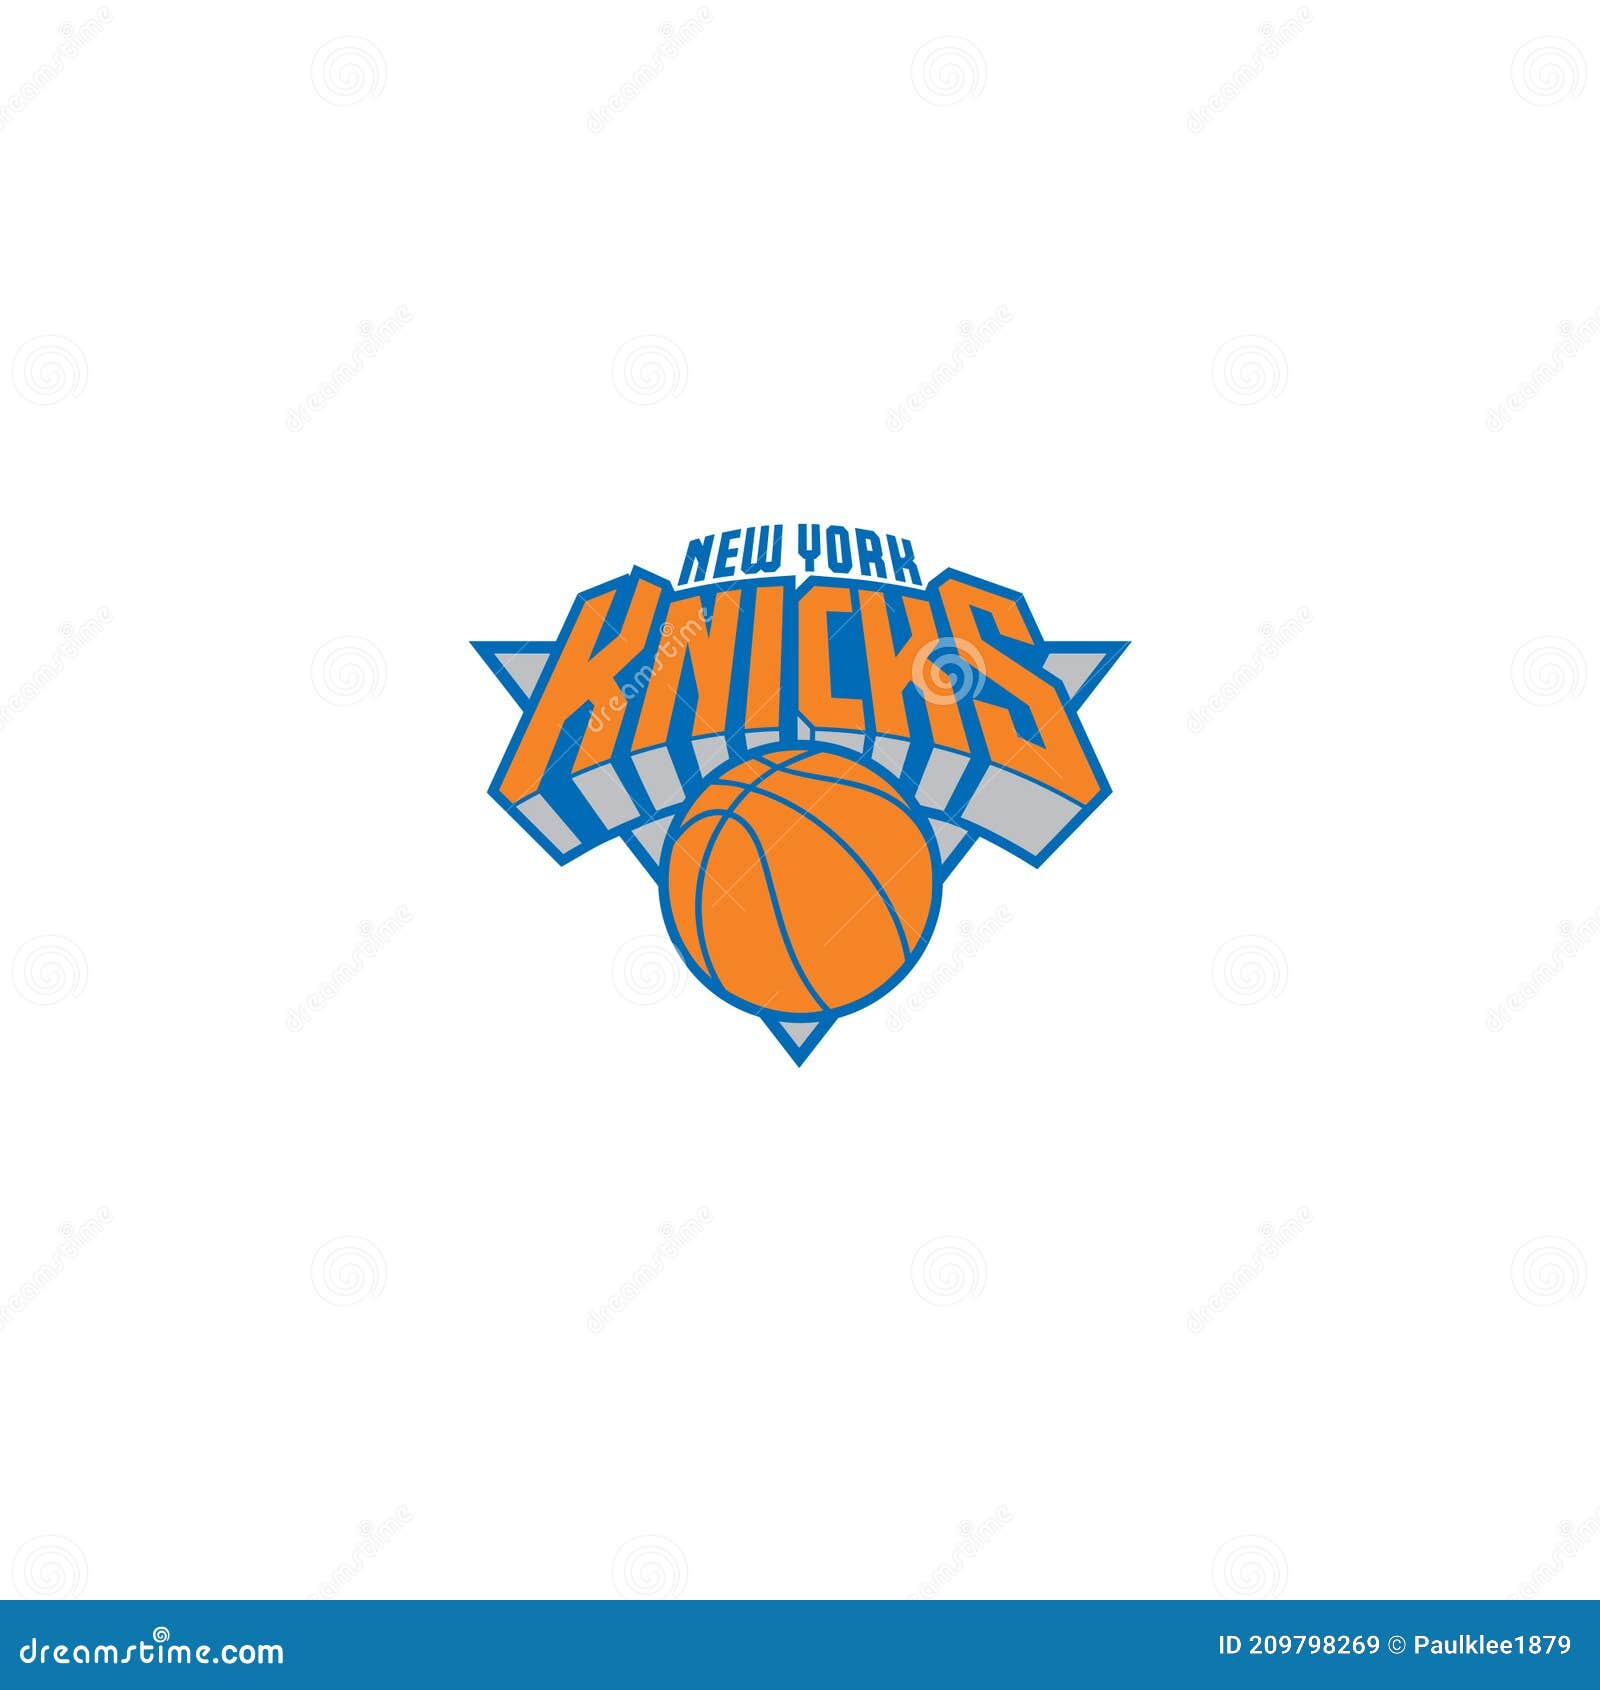 Wallpaper Basketball, Background, Logo, New York, New York, NBA